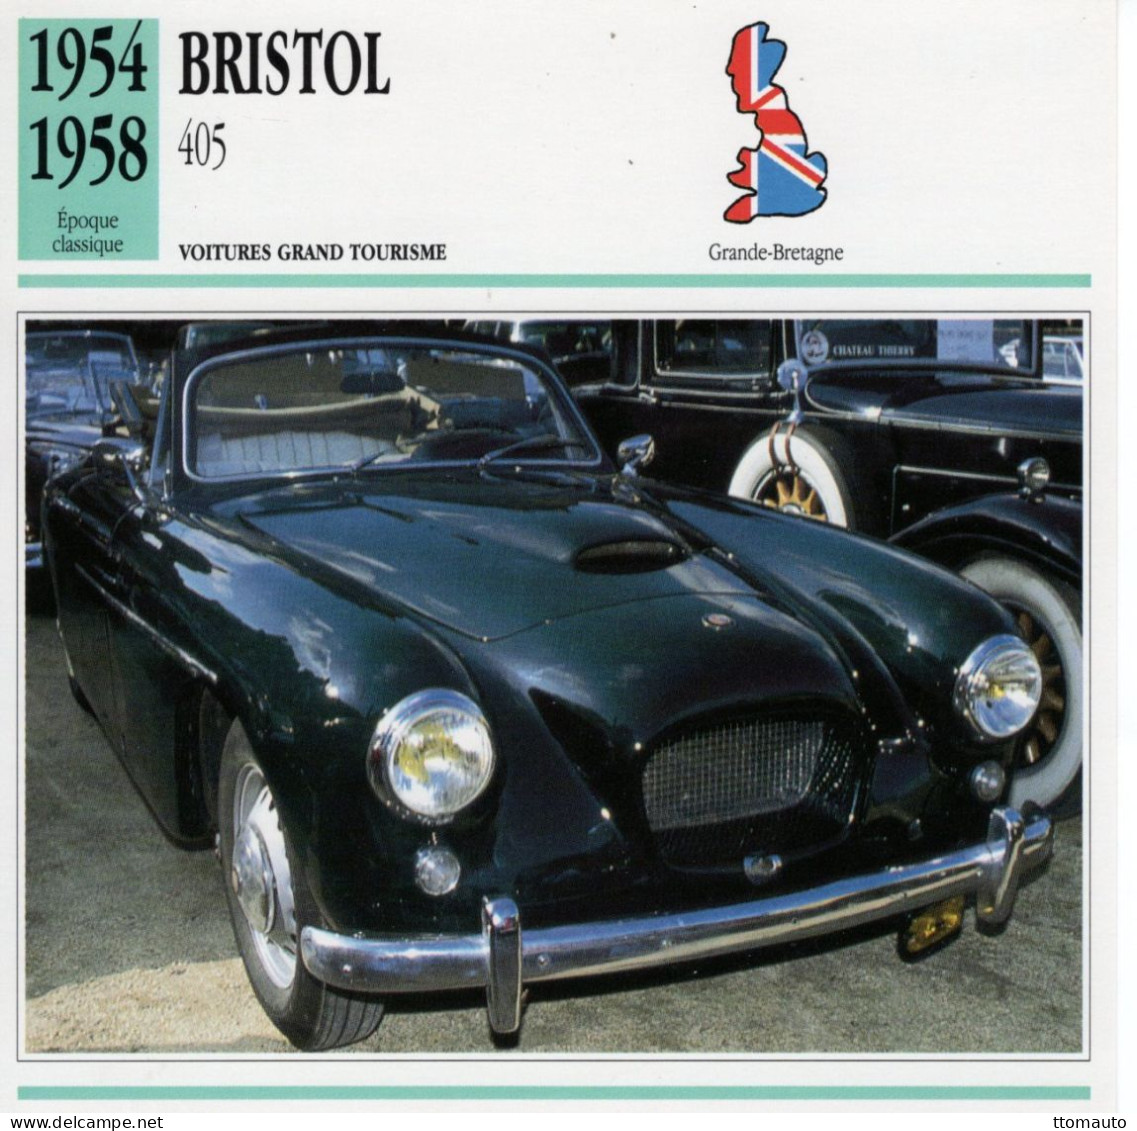 Bristol 405  -  1956  - Voiture Grand Tourisme -  Fiche Technique Automobile (GB) - Cars